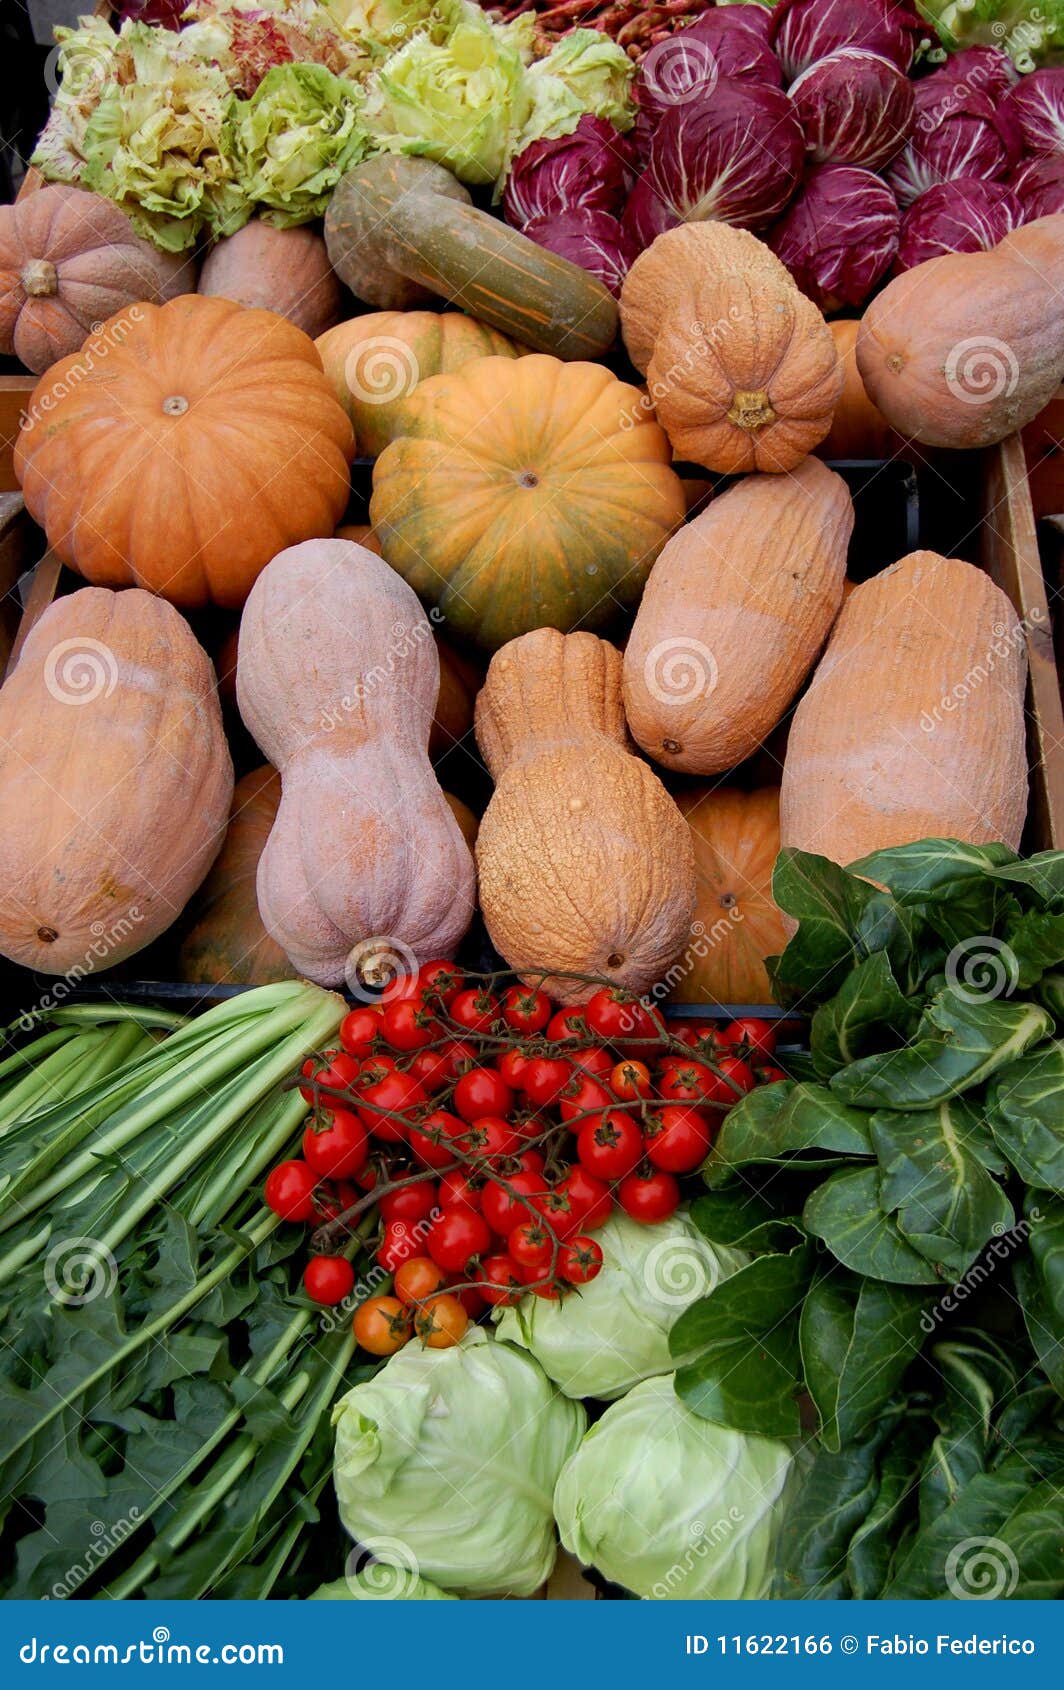 vegetables on sale